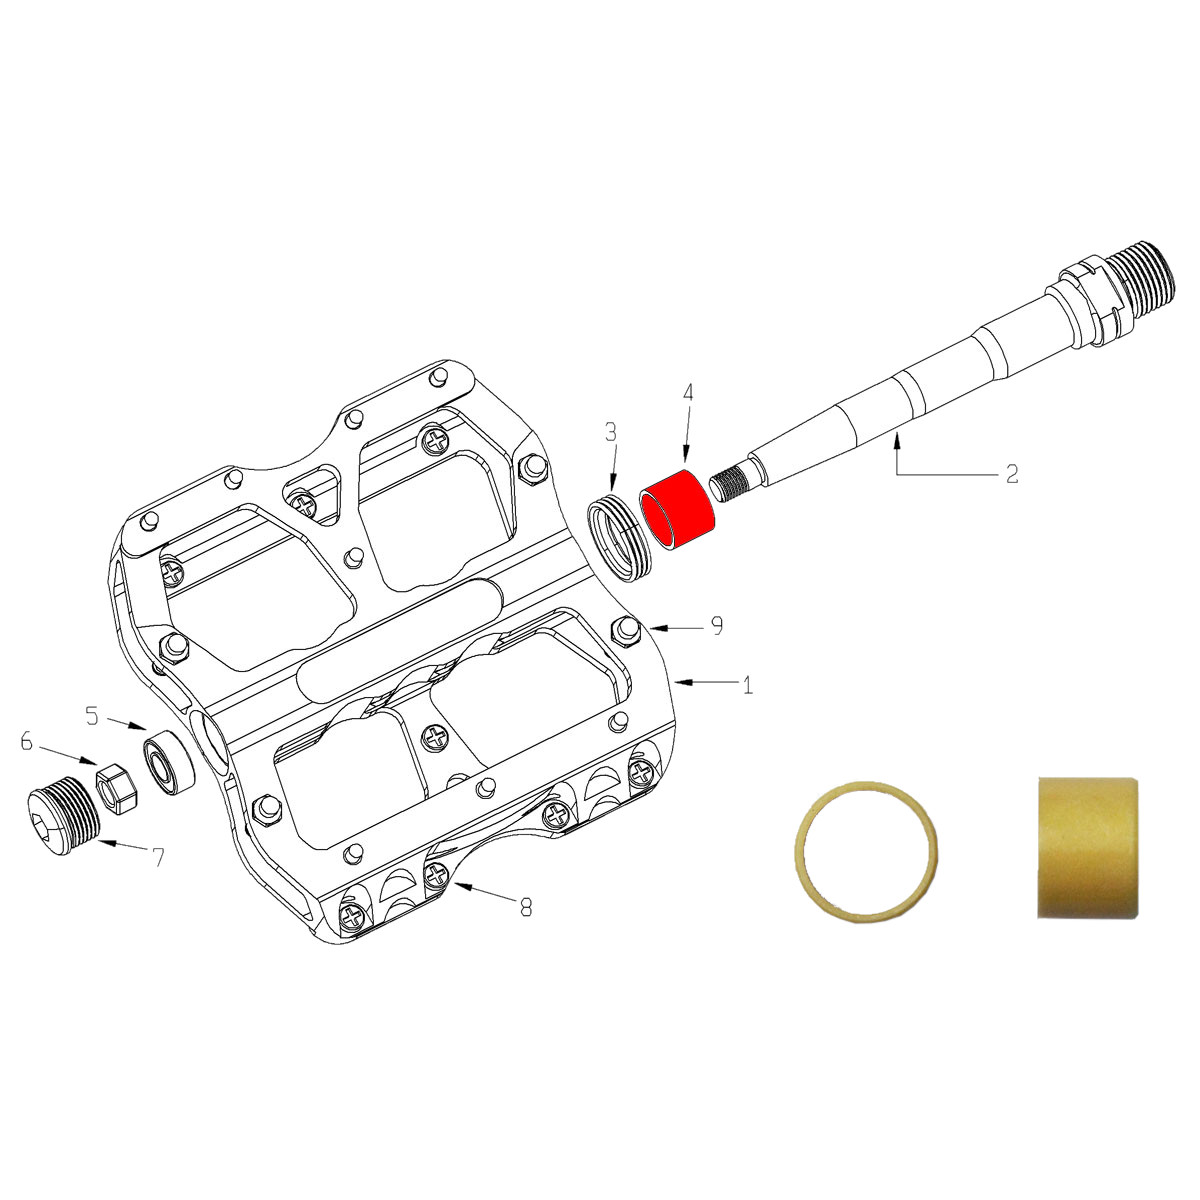 Picture of Reverse Components DU Bushings for Escape Pedals